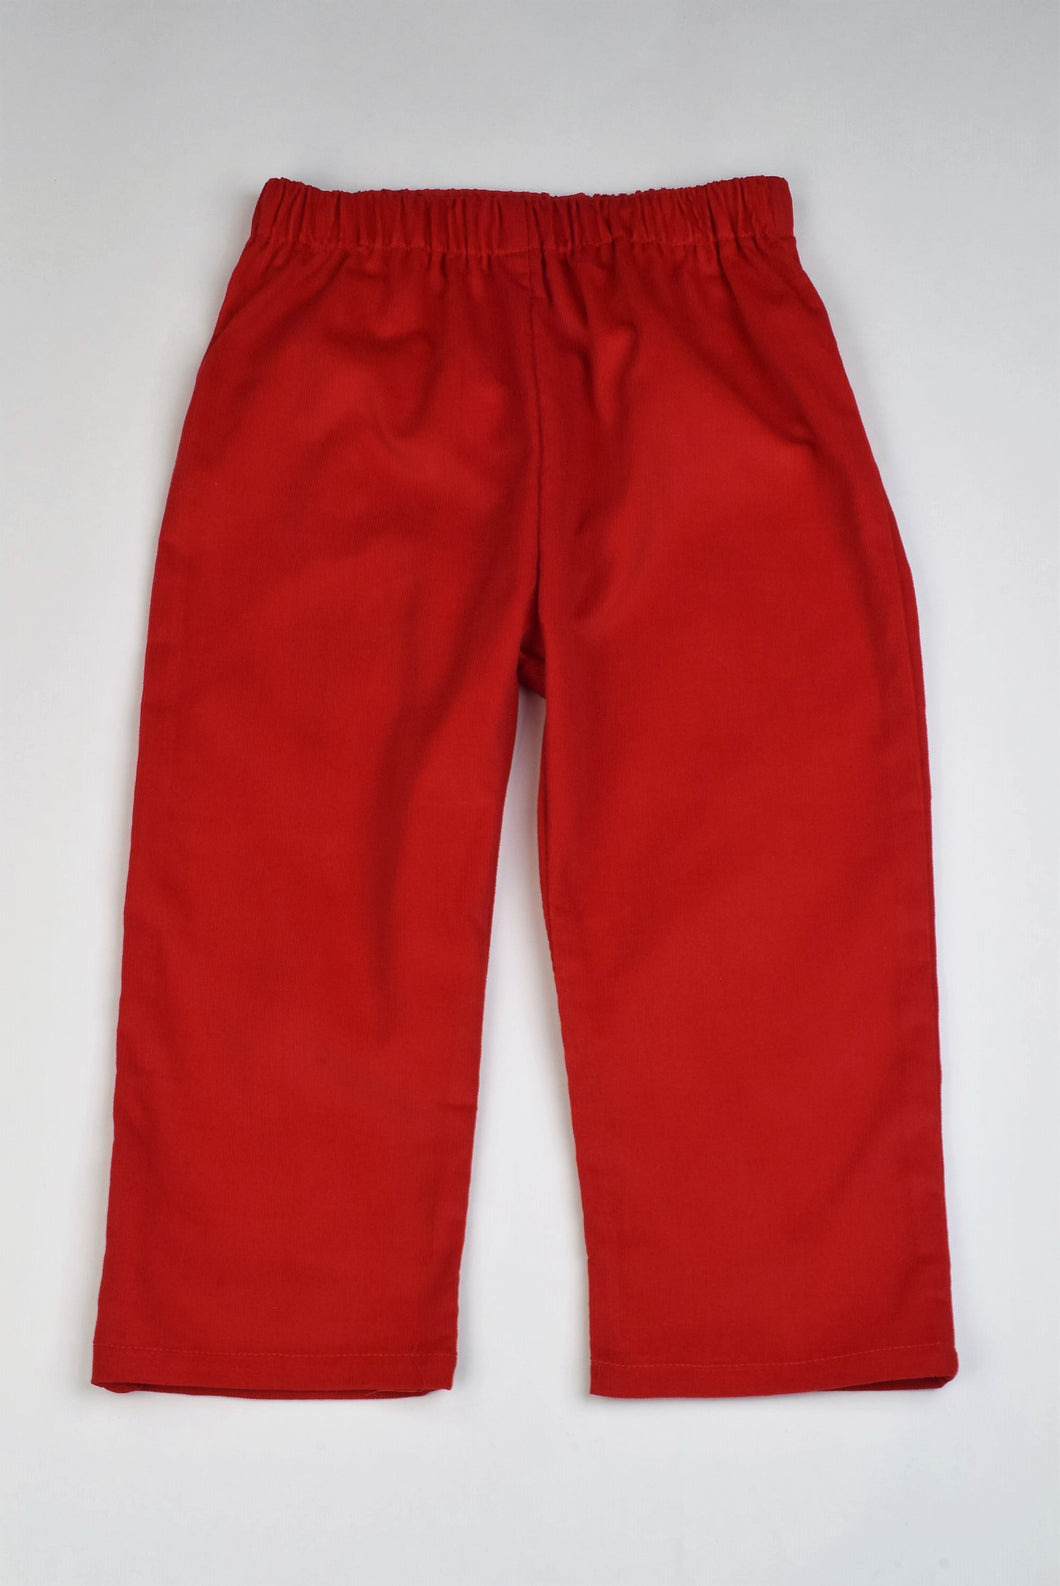 Boys Red Corduroy Pants